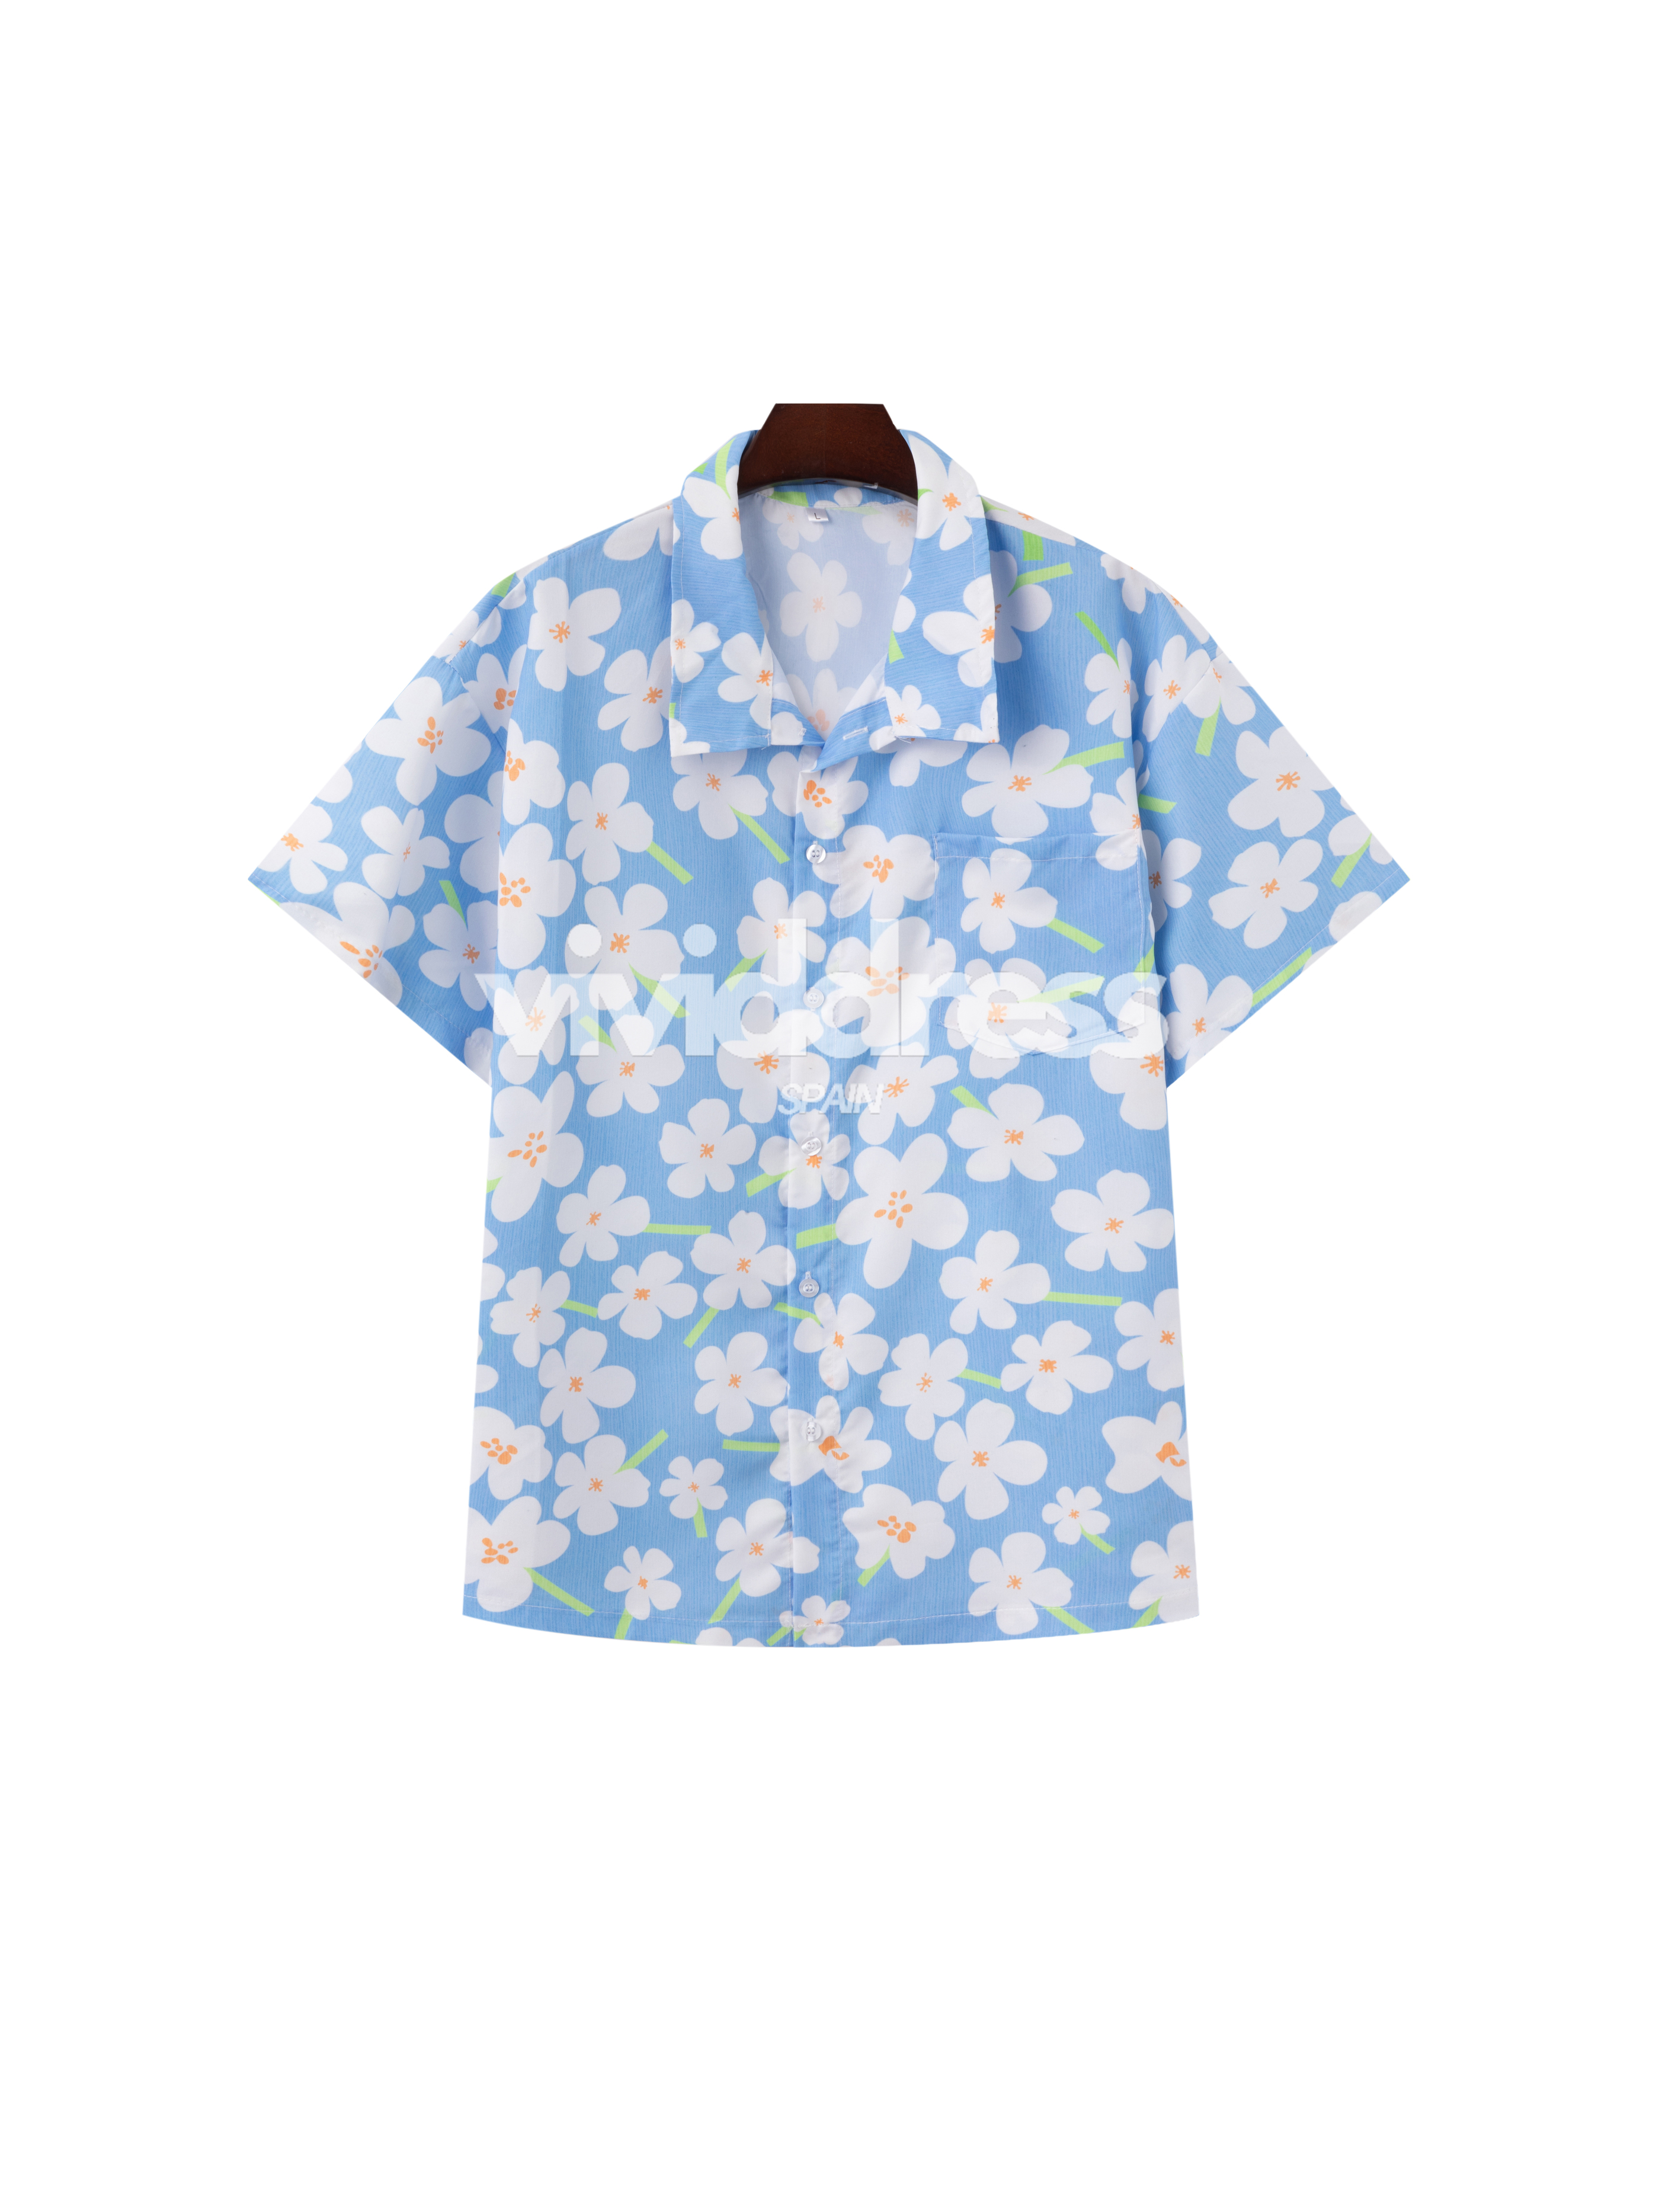 Men's Casual Flower Print Summer Holiday Short Sleeve Shirt